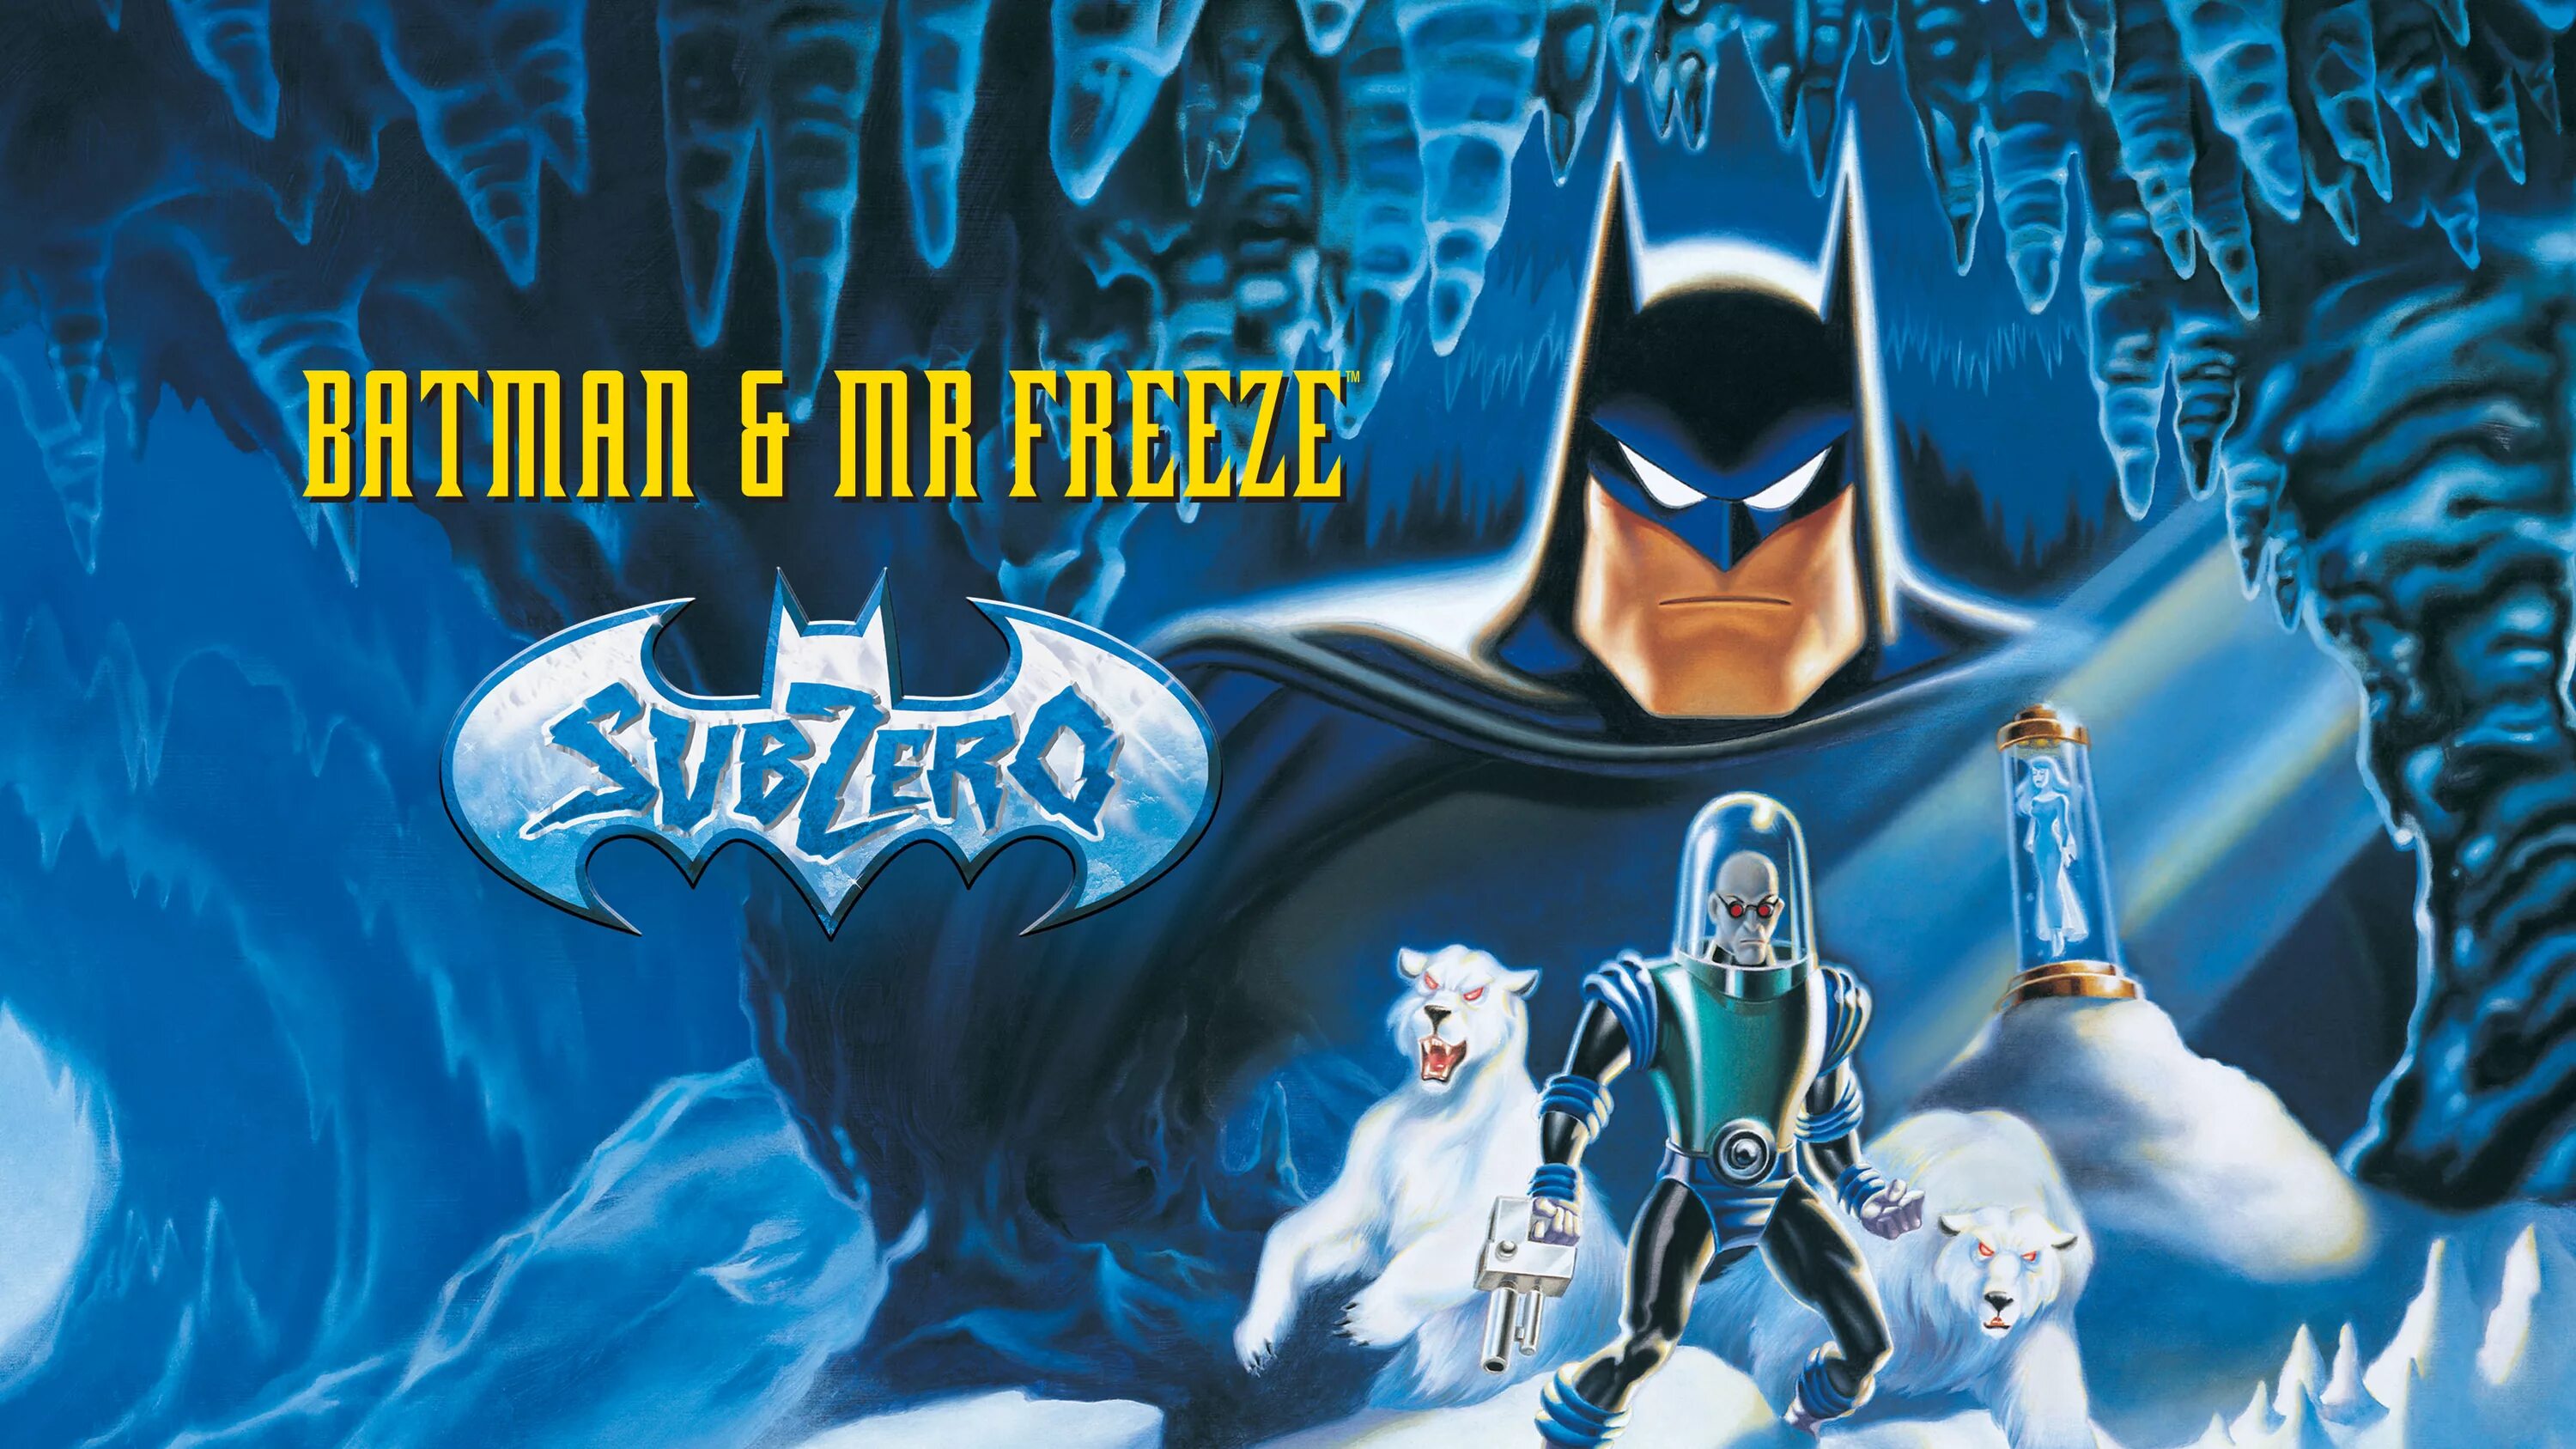 Бэтмен 1992 Мистер фриз. Мистер фриз Бэтмен. Batman and Mr Freeze Subzero.